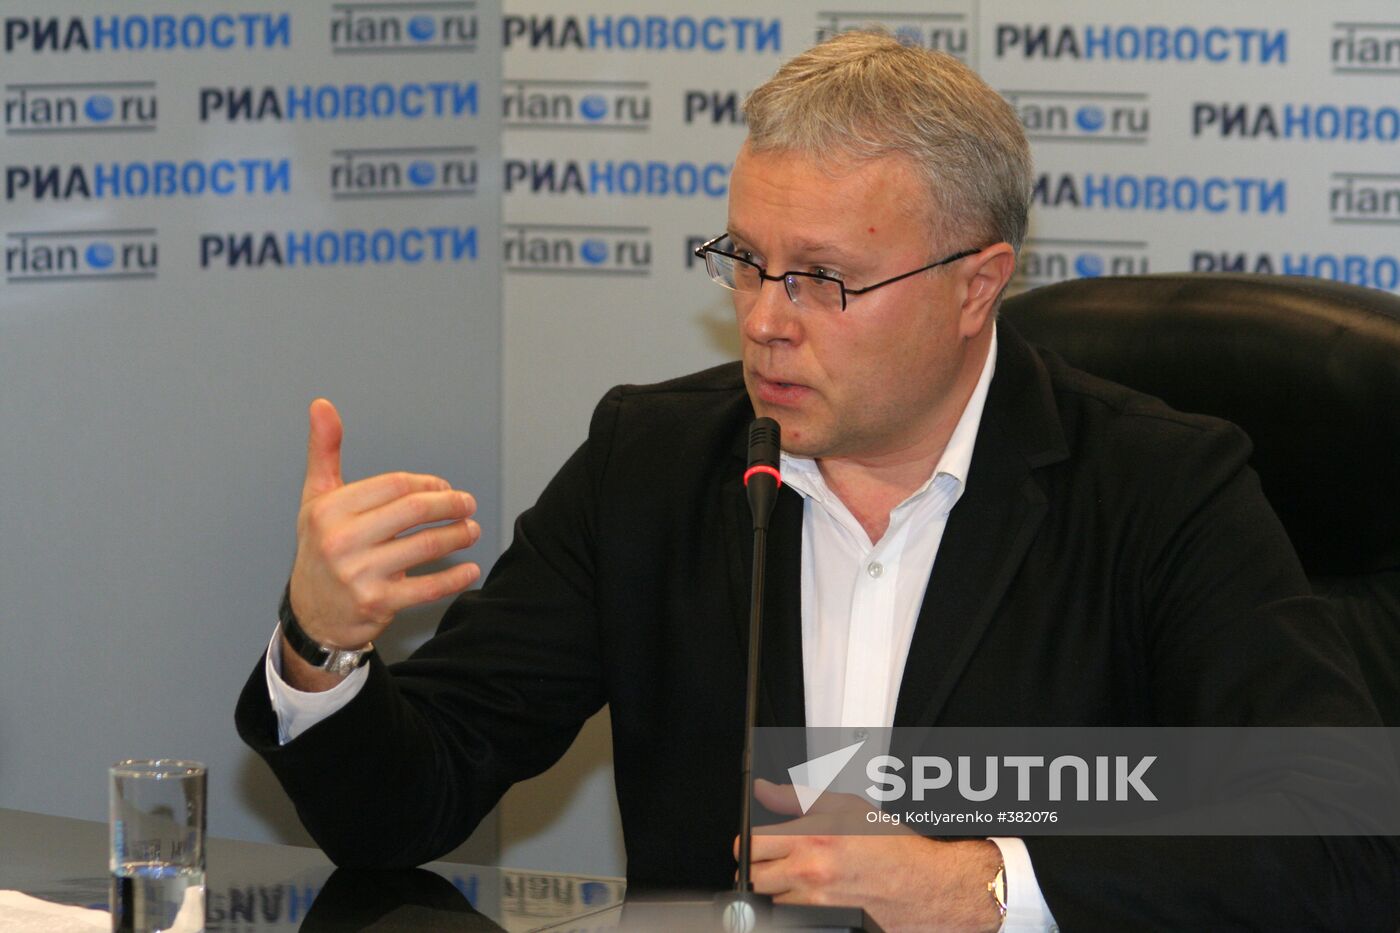 Alexander Lebedev during a news conference